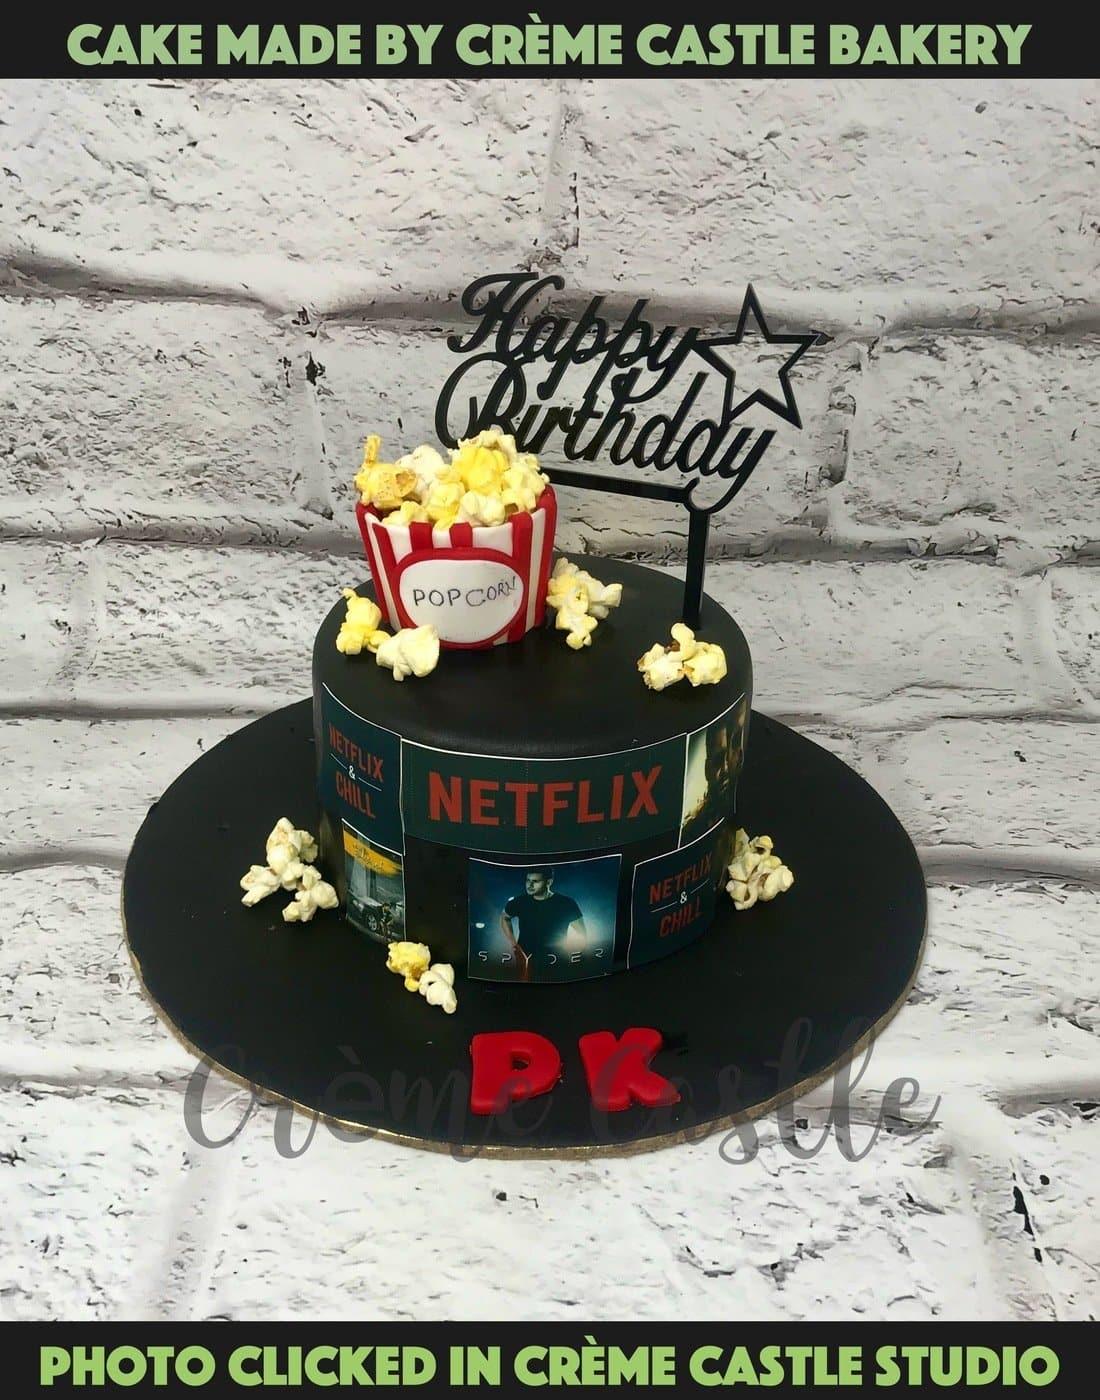 Netflix and Popcorn Design Cake - Creme Castle